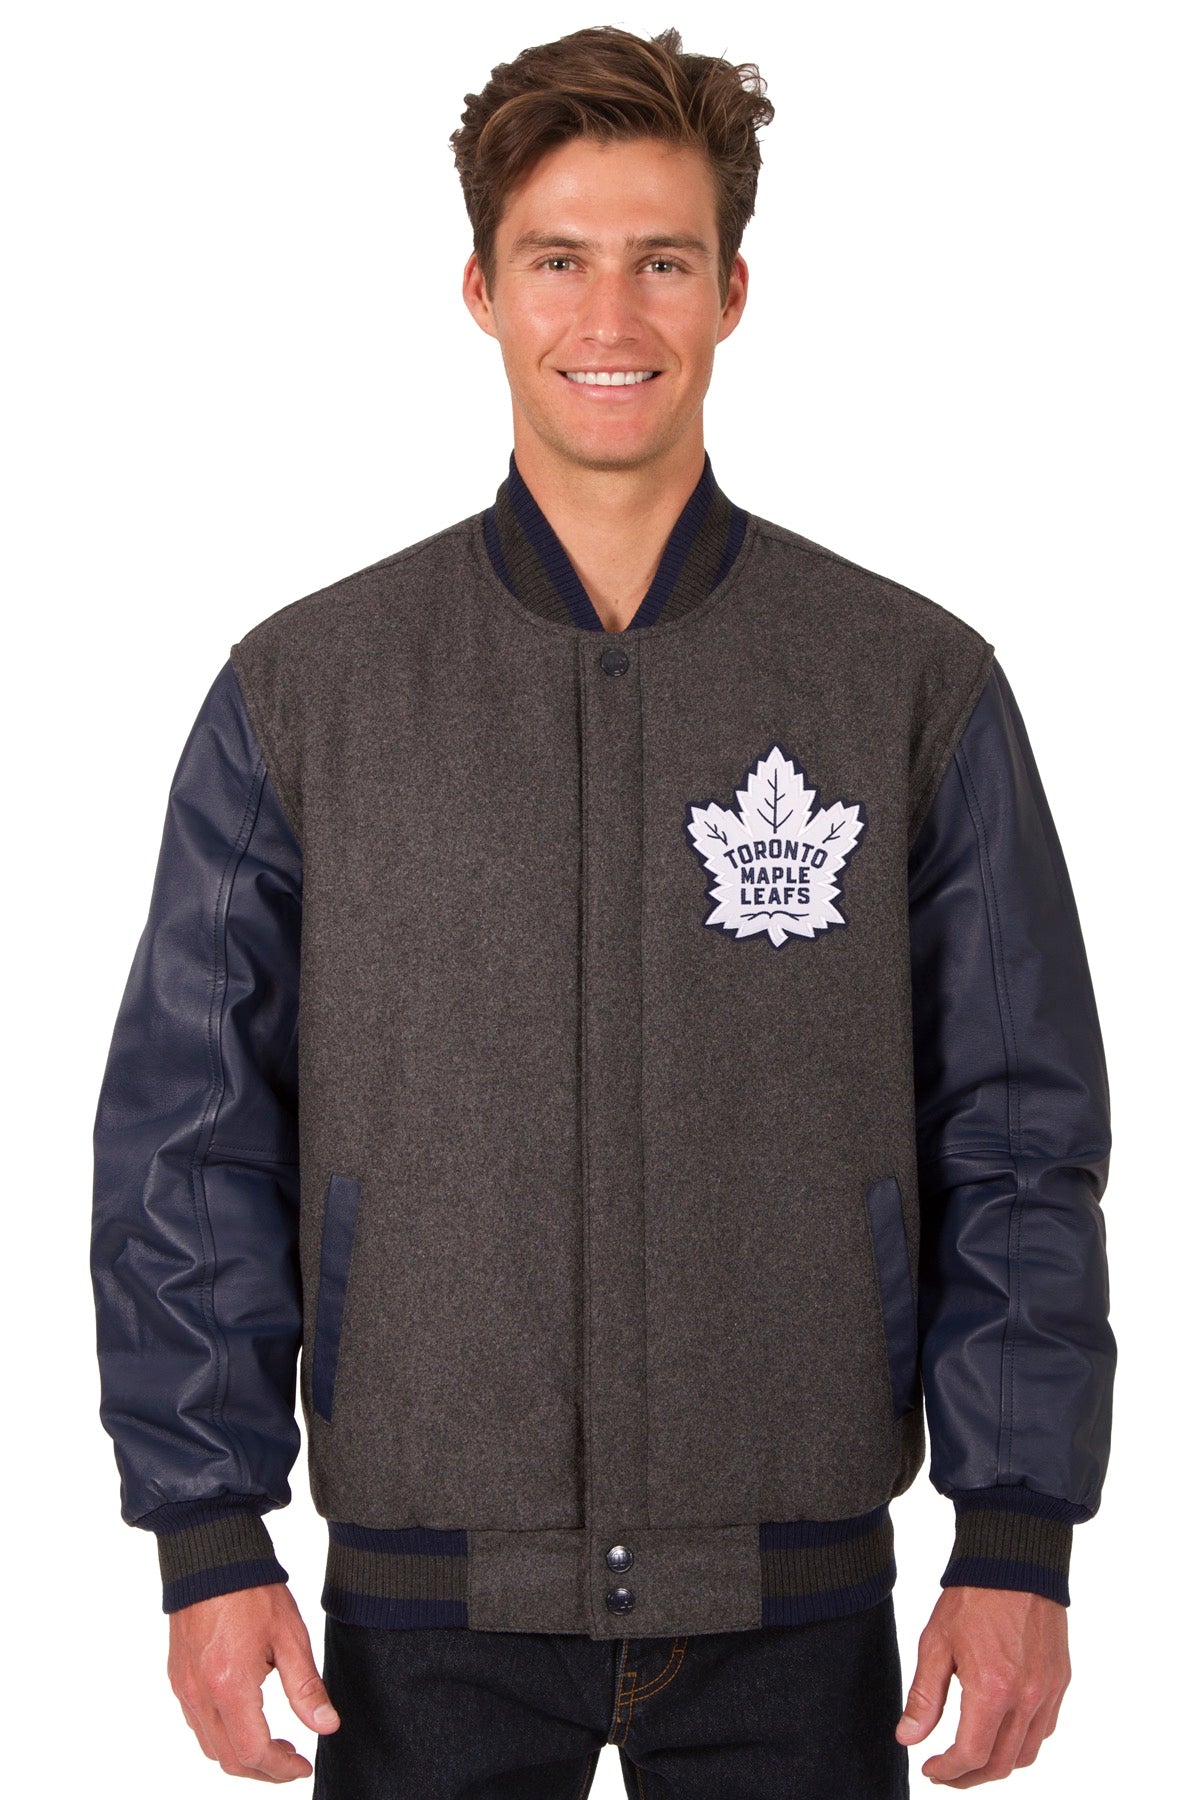 Toronto Maple Leafs Jacket, Maple Leafs Pullover, Toronto Maple Leafs  Varsity Jackets, Fleece Jacket